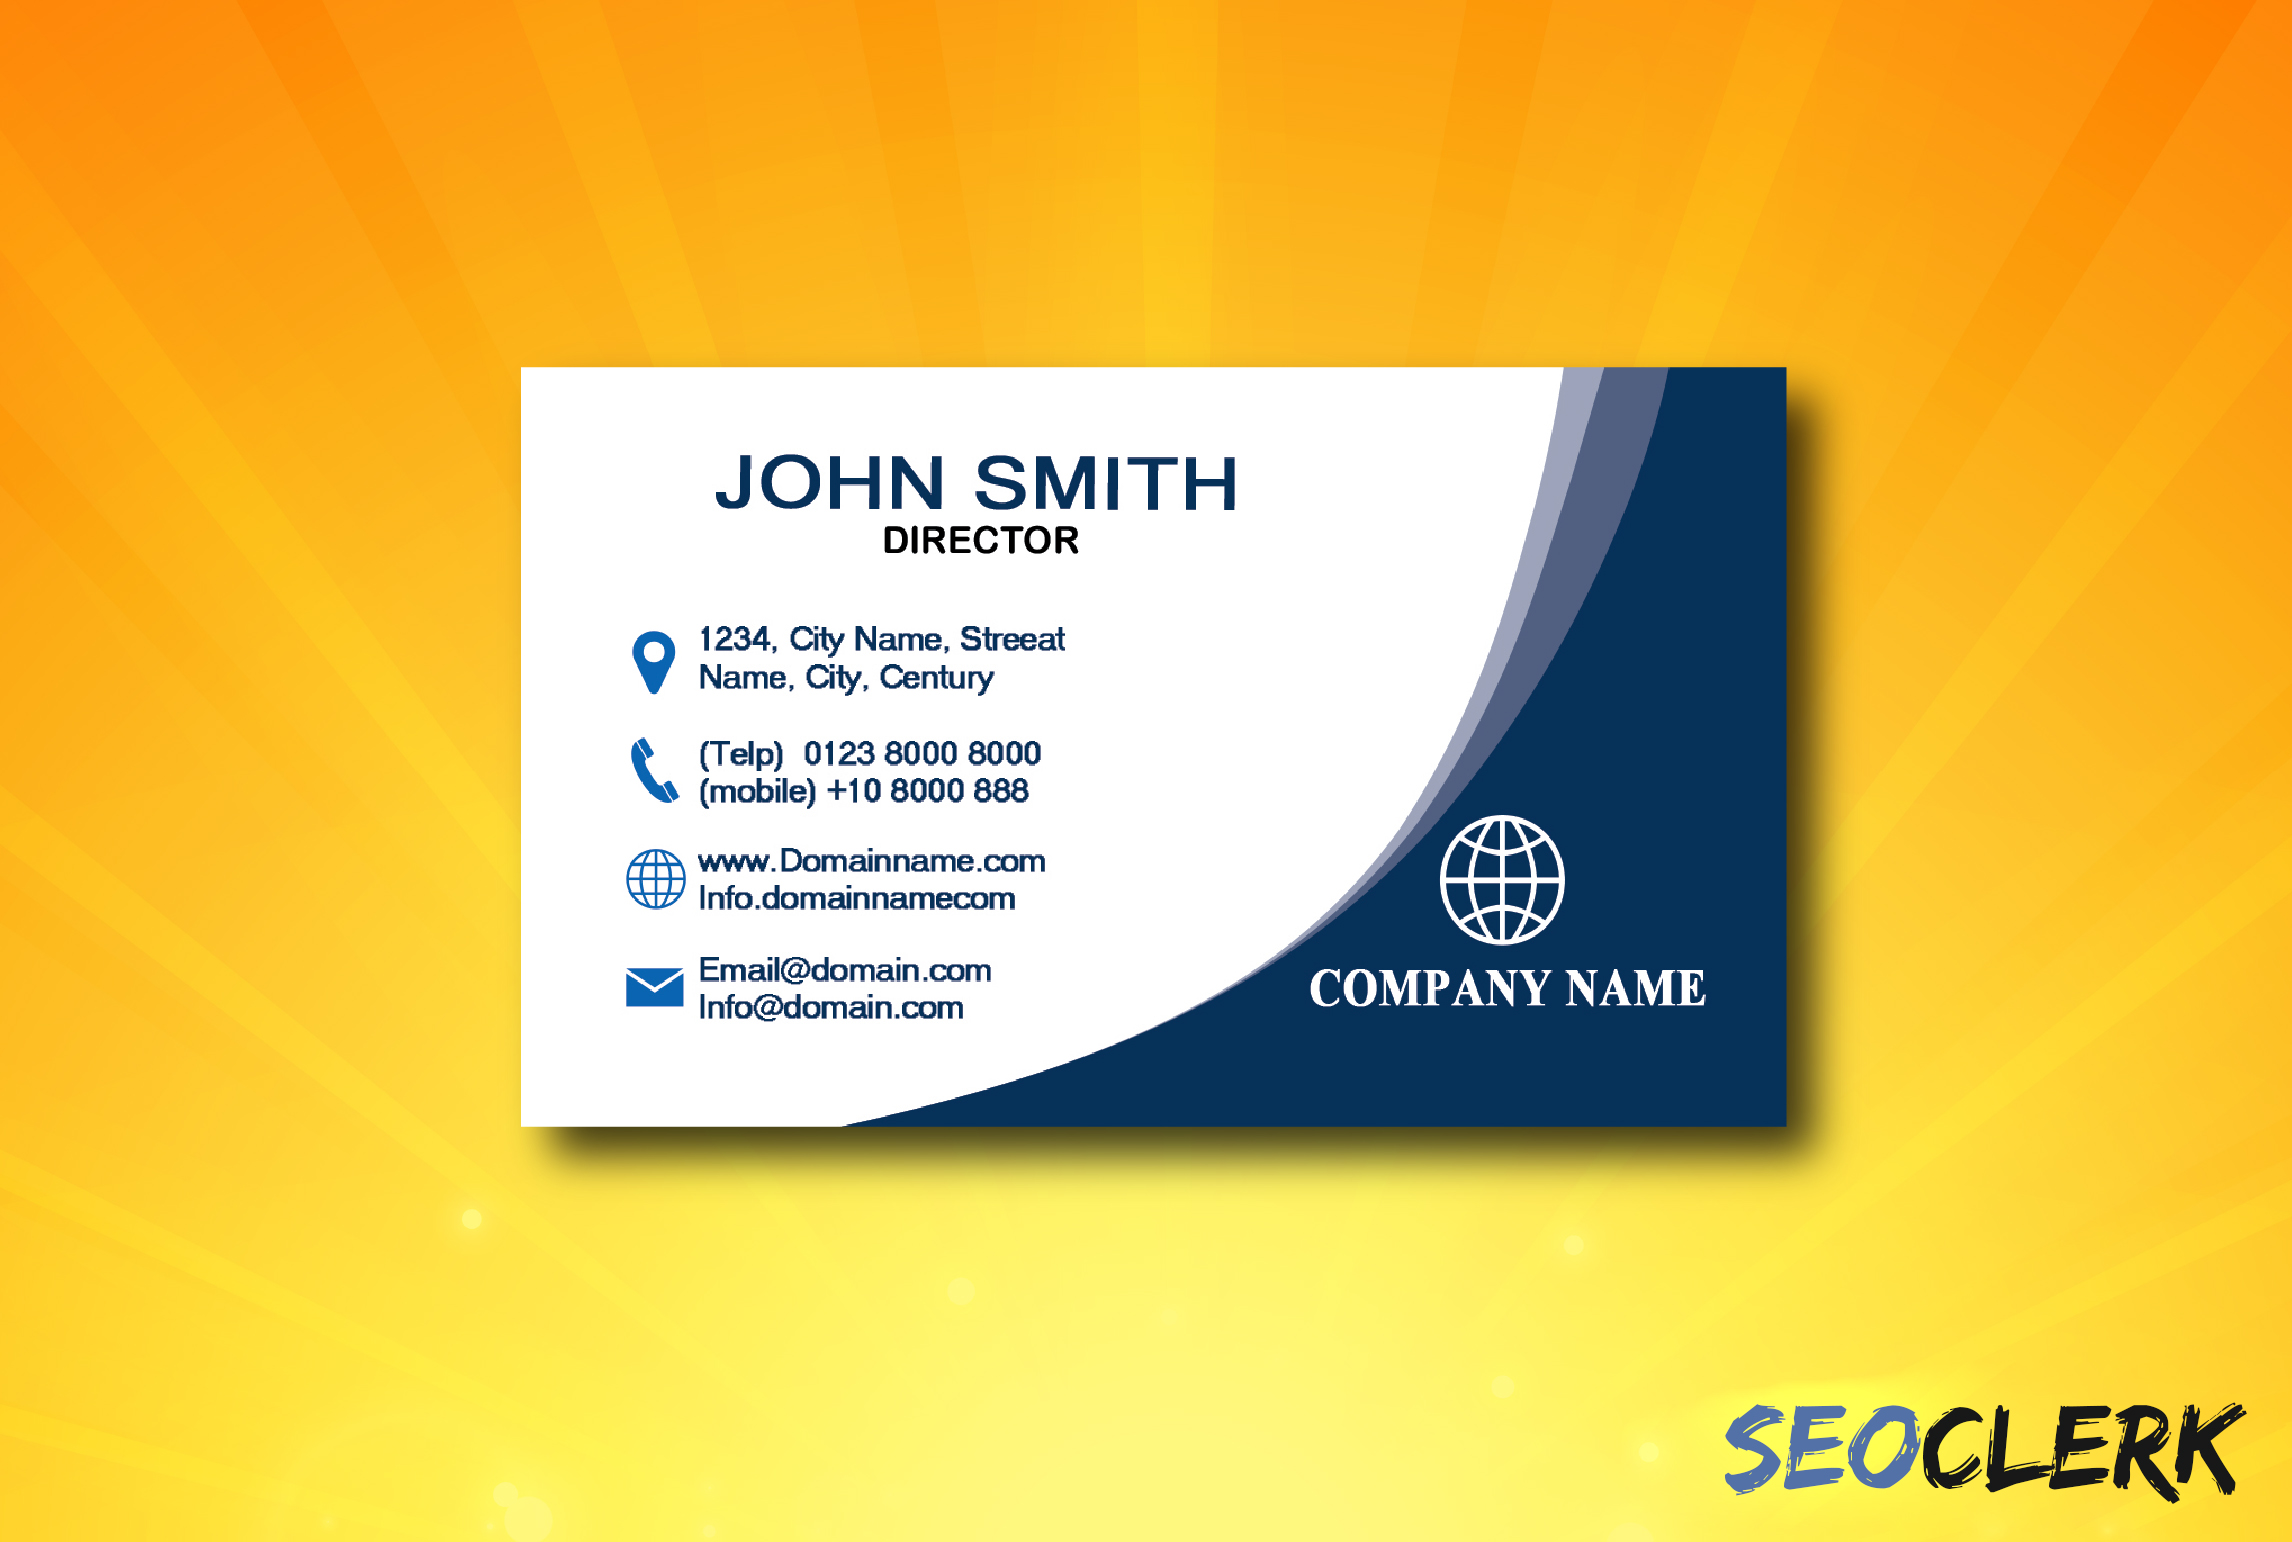 I will provide business card design service